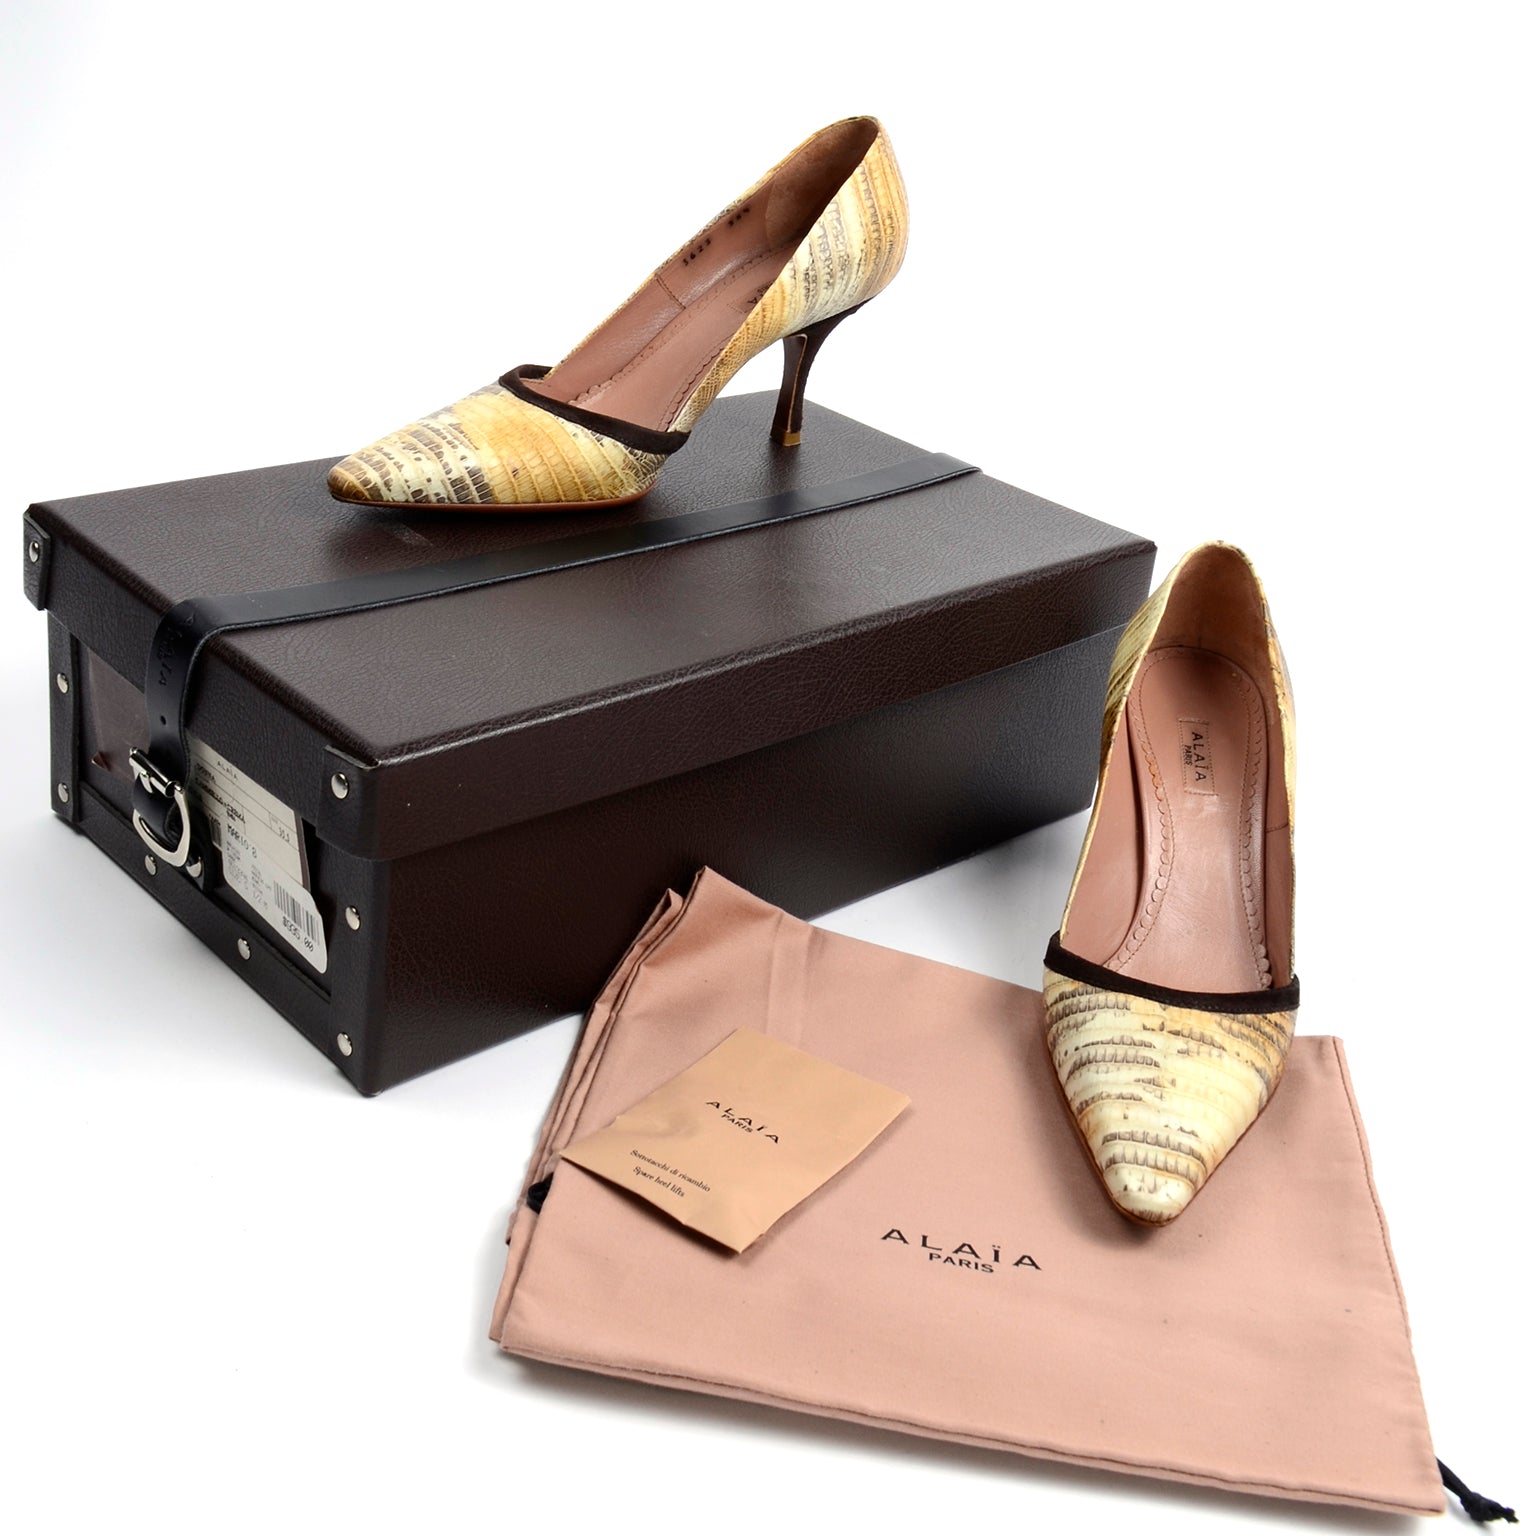 Louis Vuitton, Shoes, Louis Vuitton Snakeskin Leather Strappy Heels